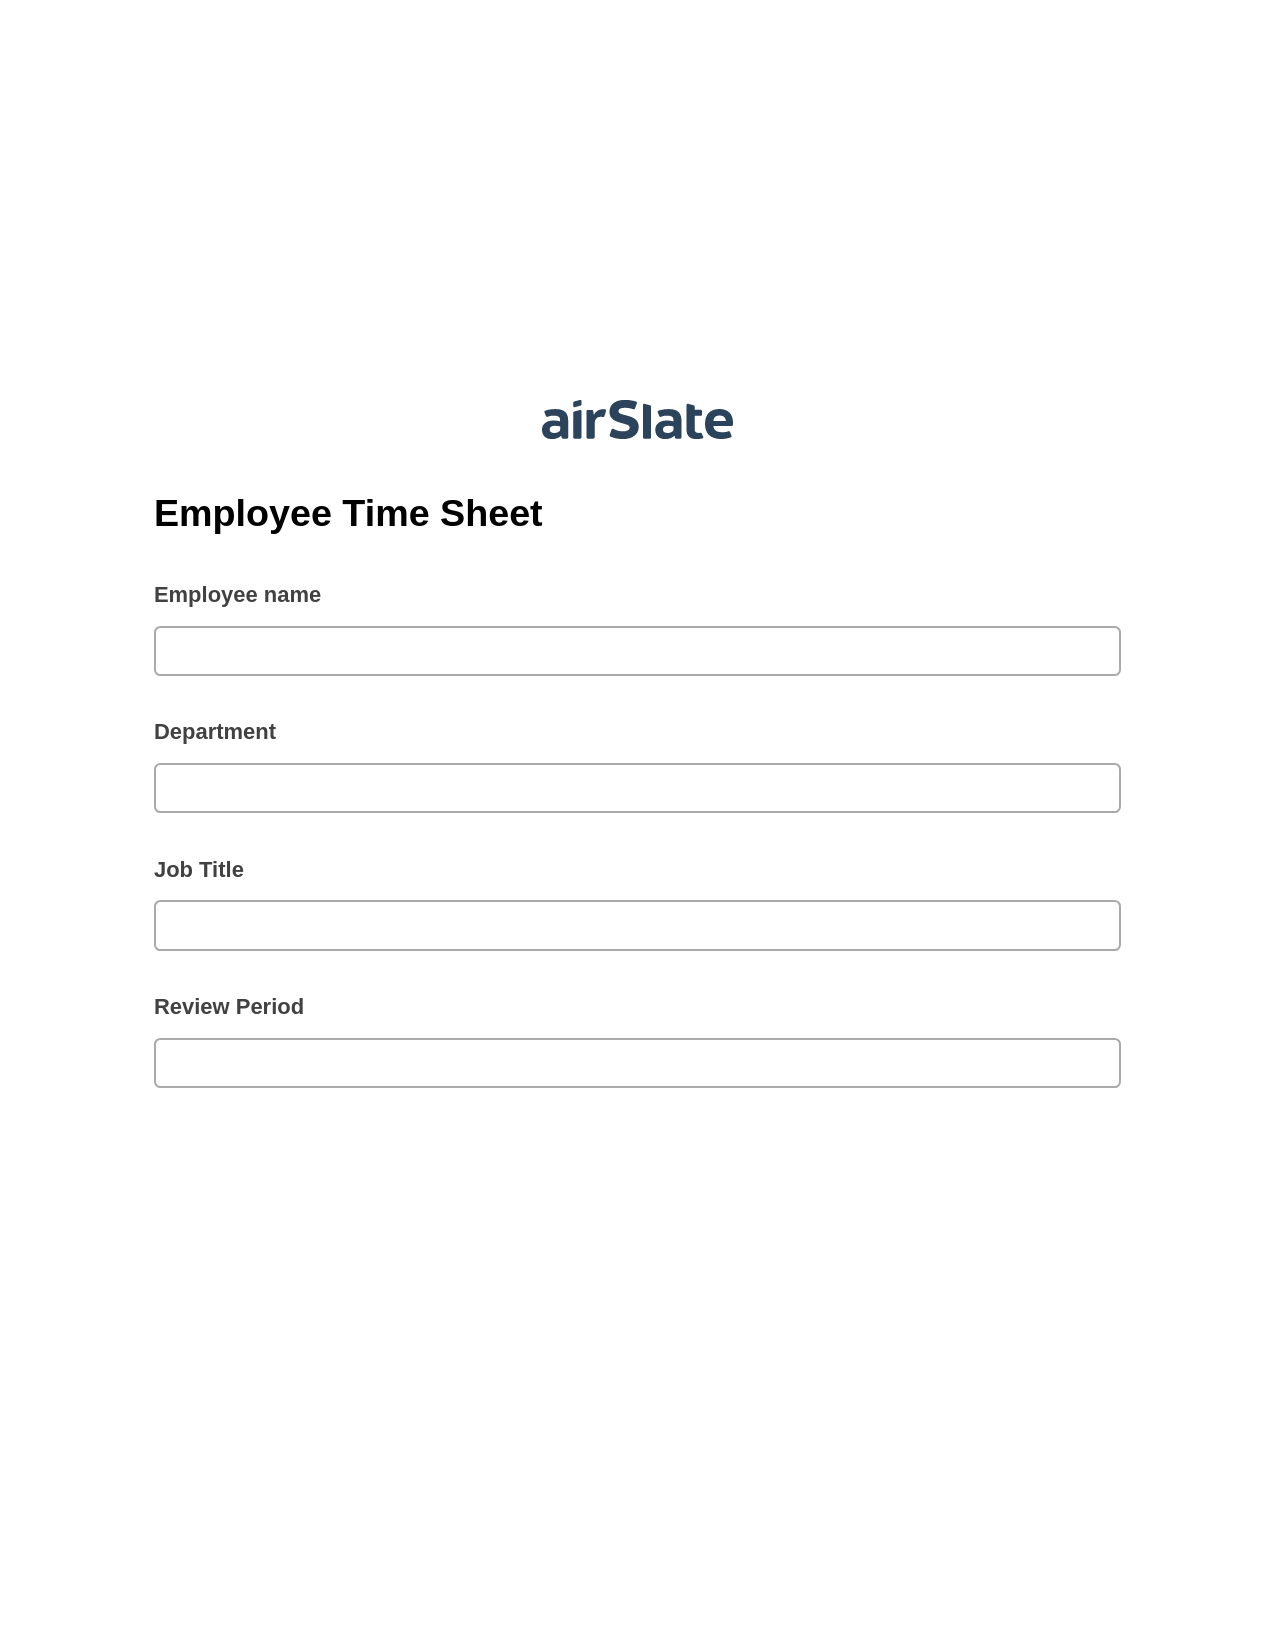 Multirole Employee Time Sheet Pre-fill from CSV File Bot, Update Audit Trail Bot, Slack Notification Postfinish Bot